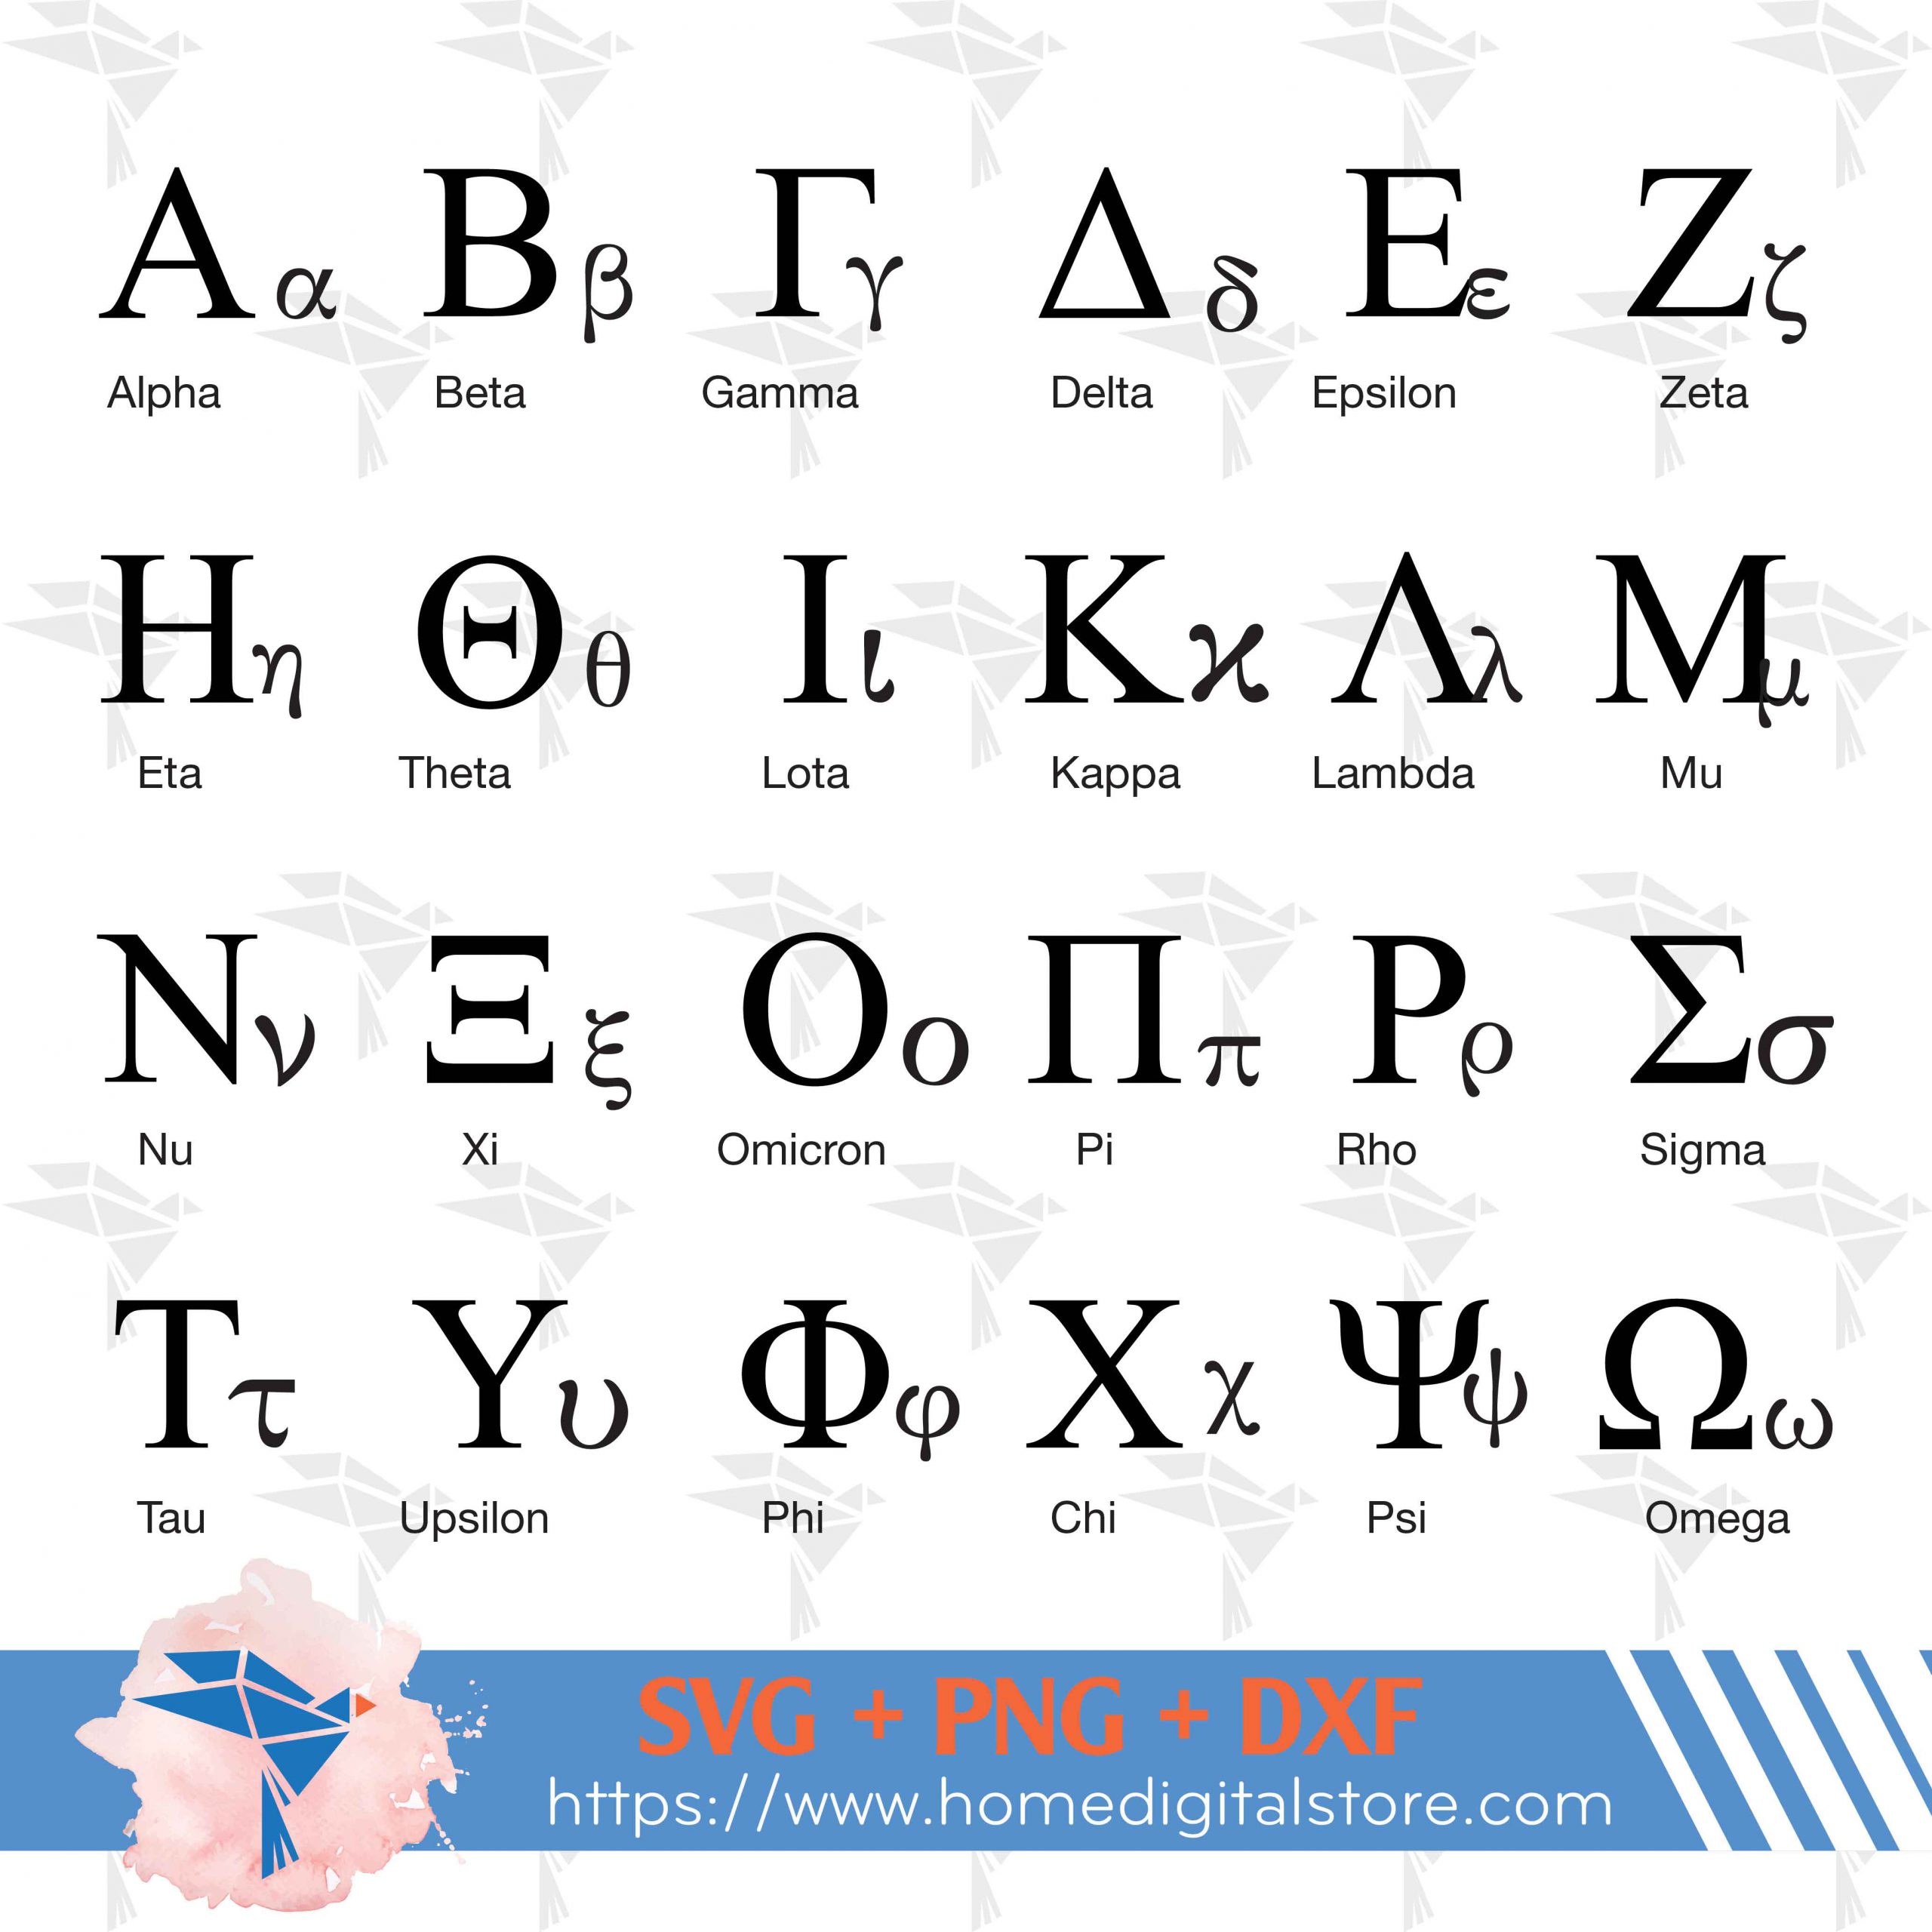 greek alphabet